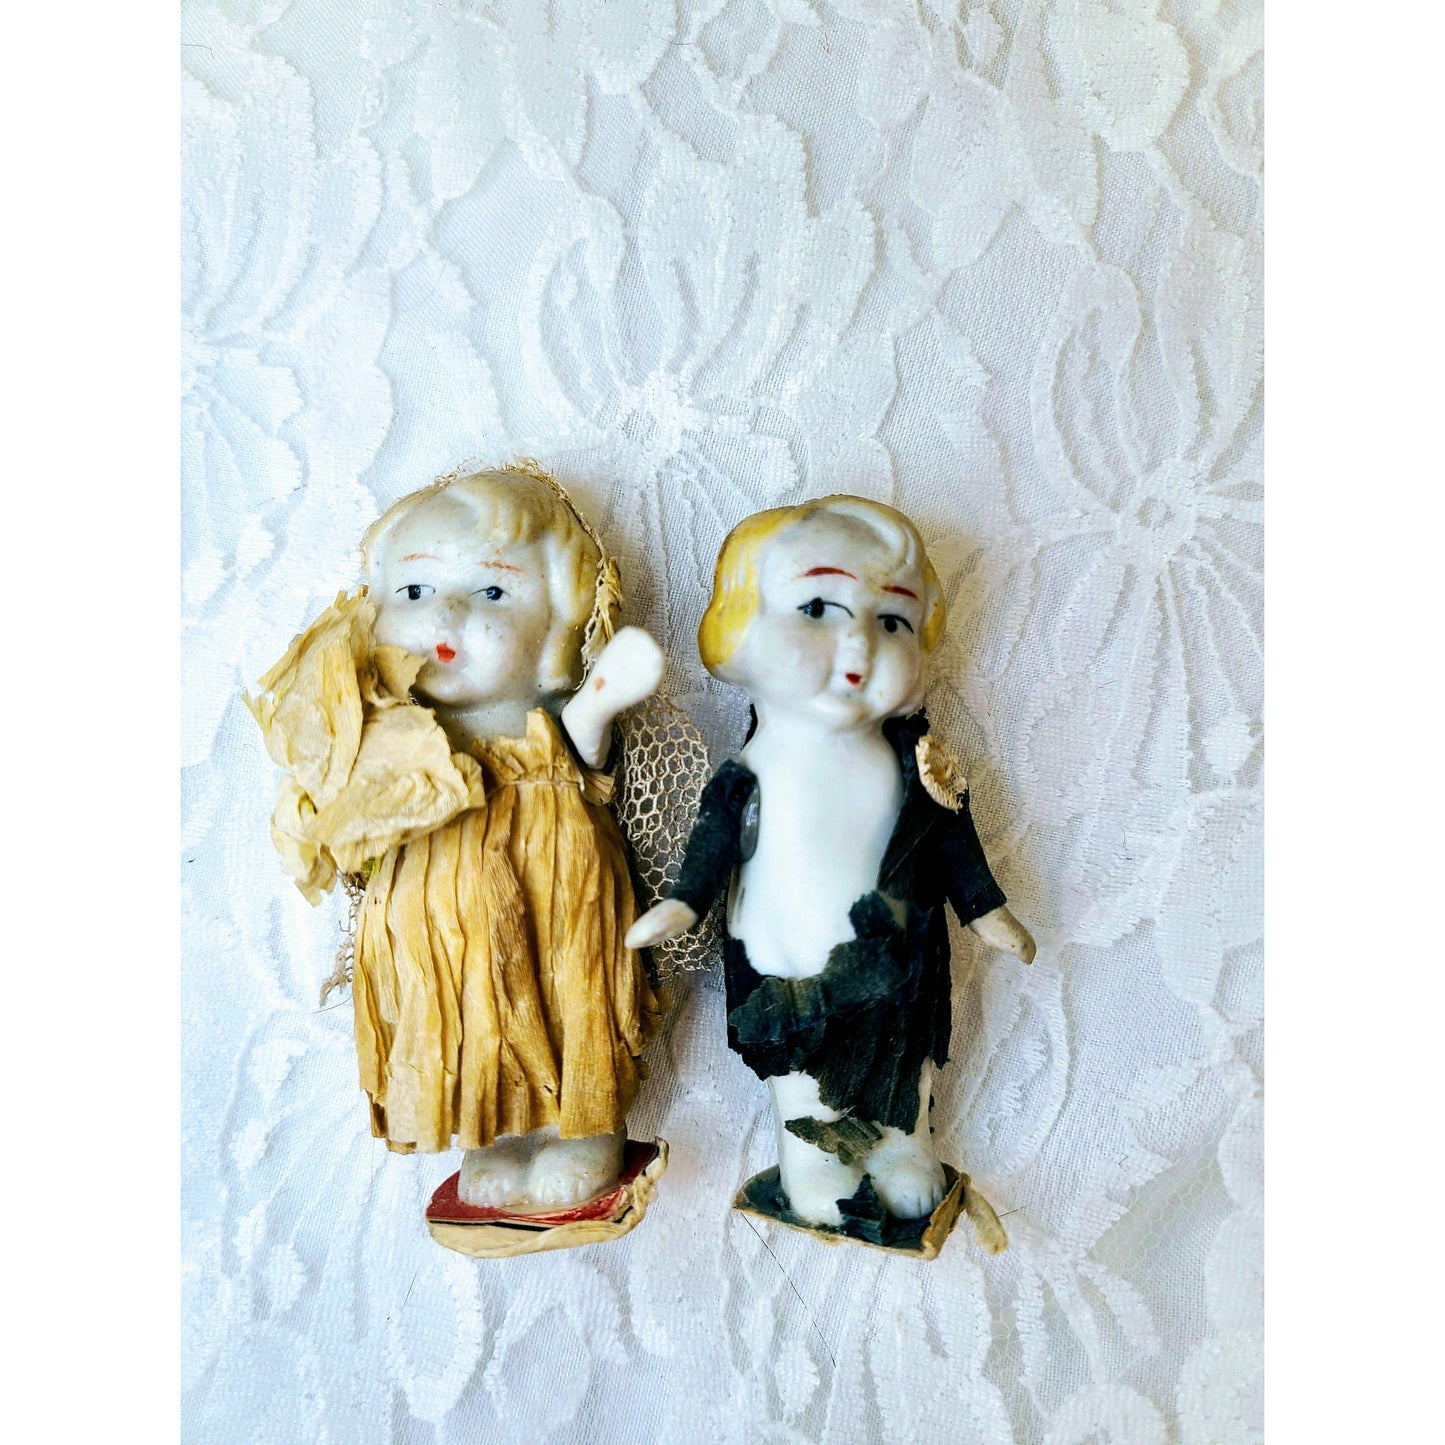 Vintage Wedding Dolls ~ Miniature Frozen Charlotte Bisque 3" Porcelain Dolls ~ Bride & Groom ~ Crepe paper Clothing ~ Sold AS-IS